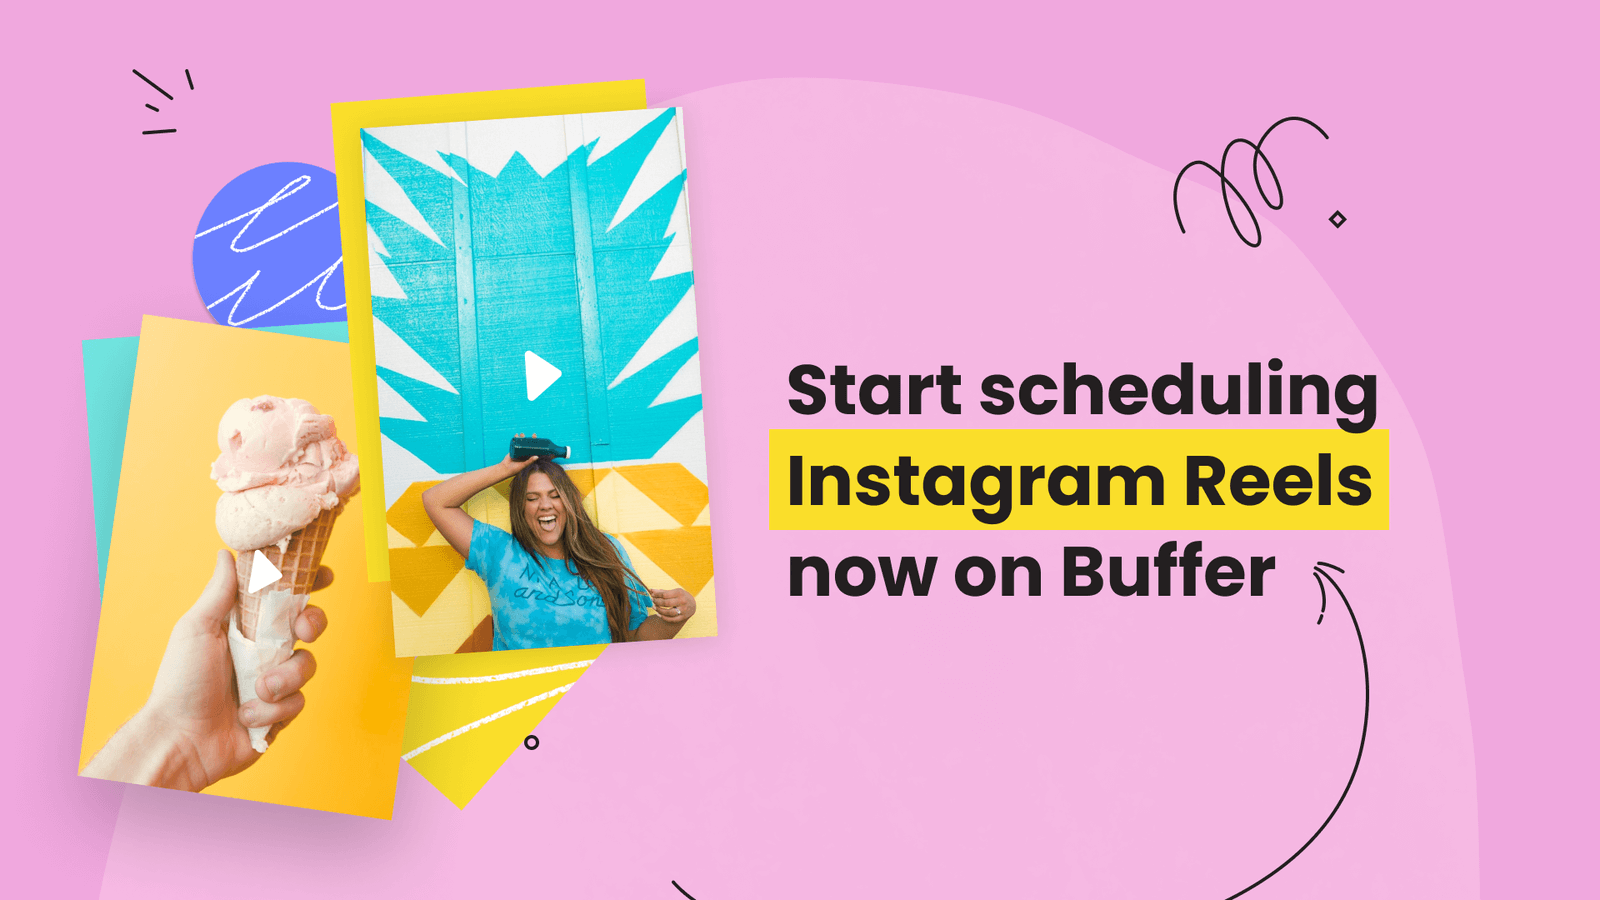 Start scheduling Instagram Reels now on Buffer